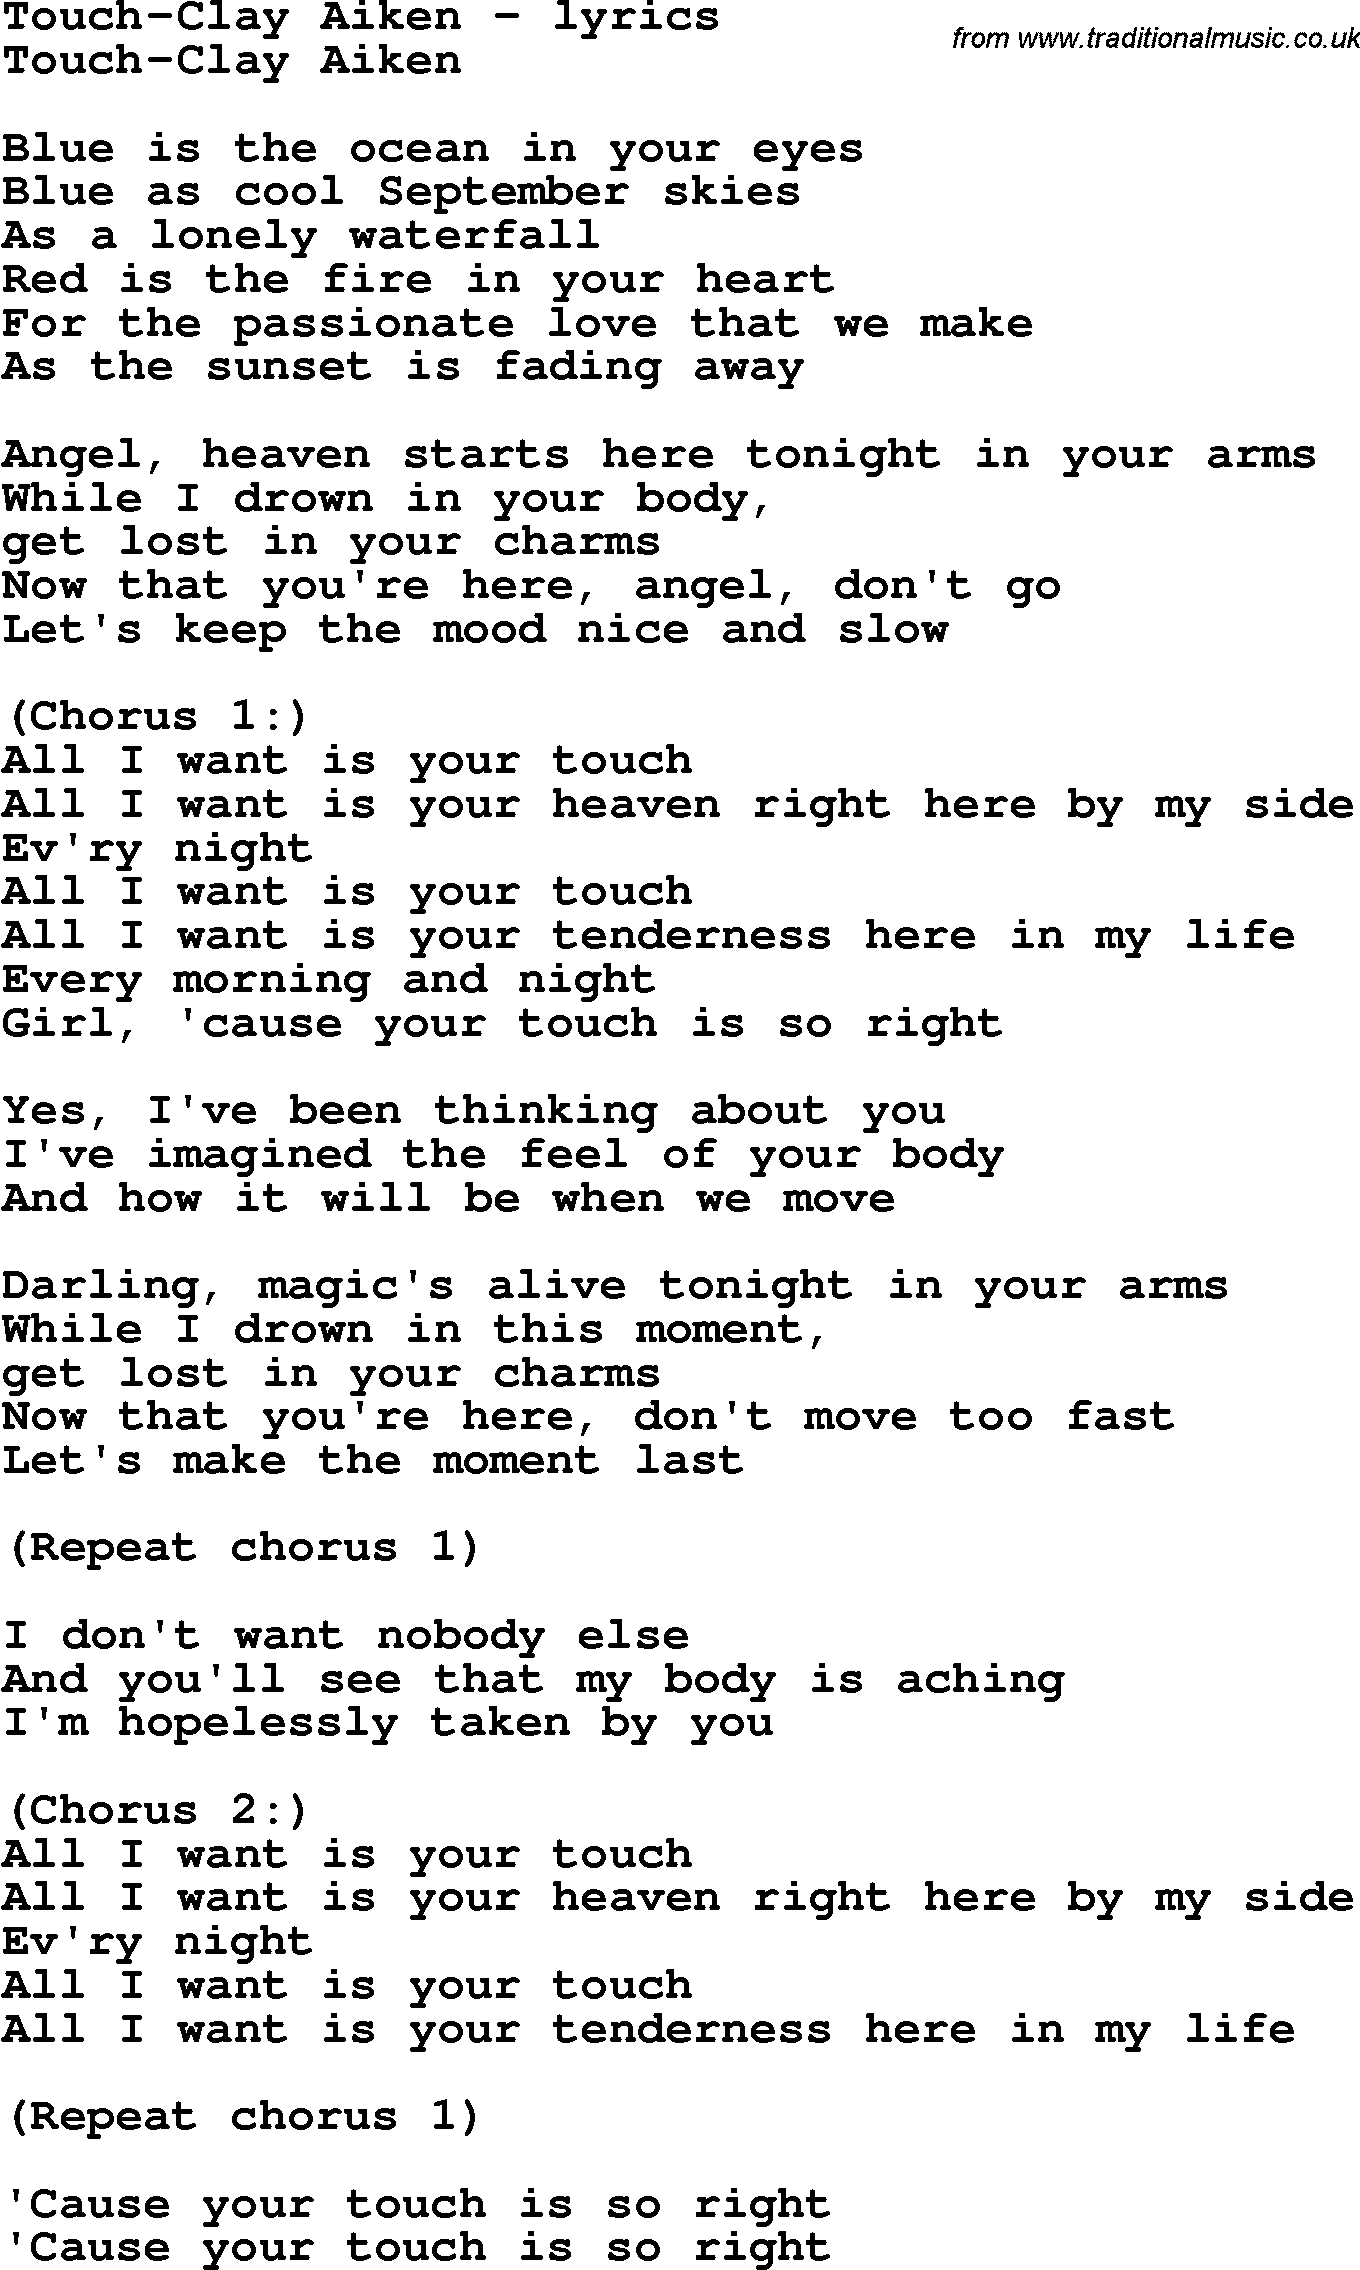 Love Song Lyrics for: Touch-Clay Aiken